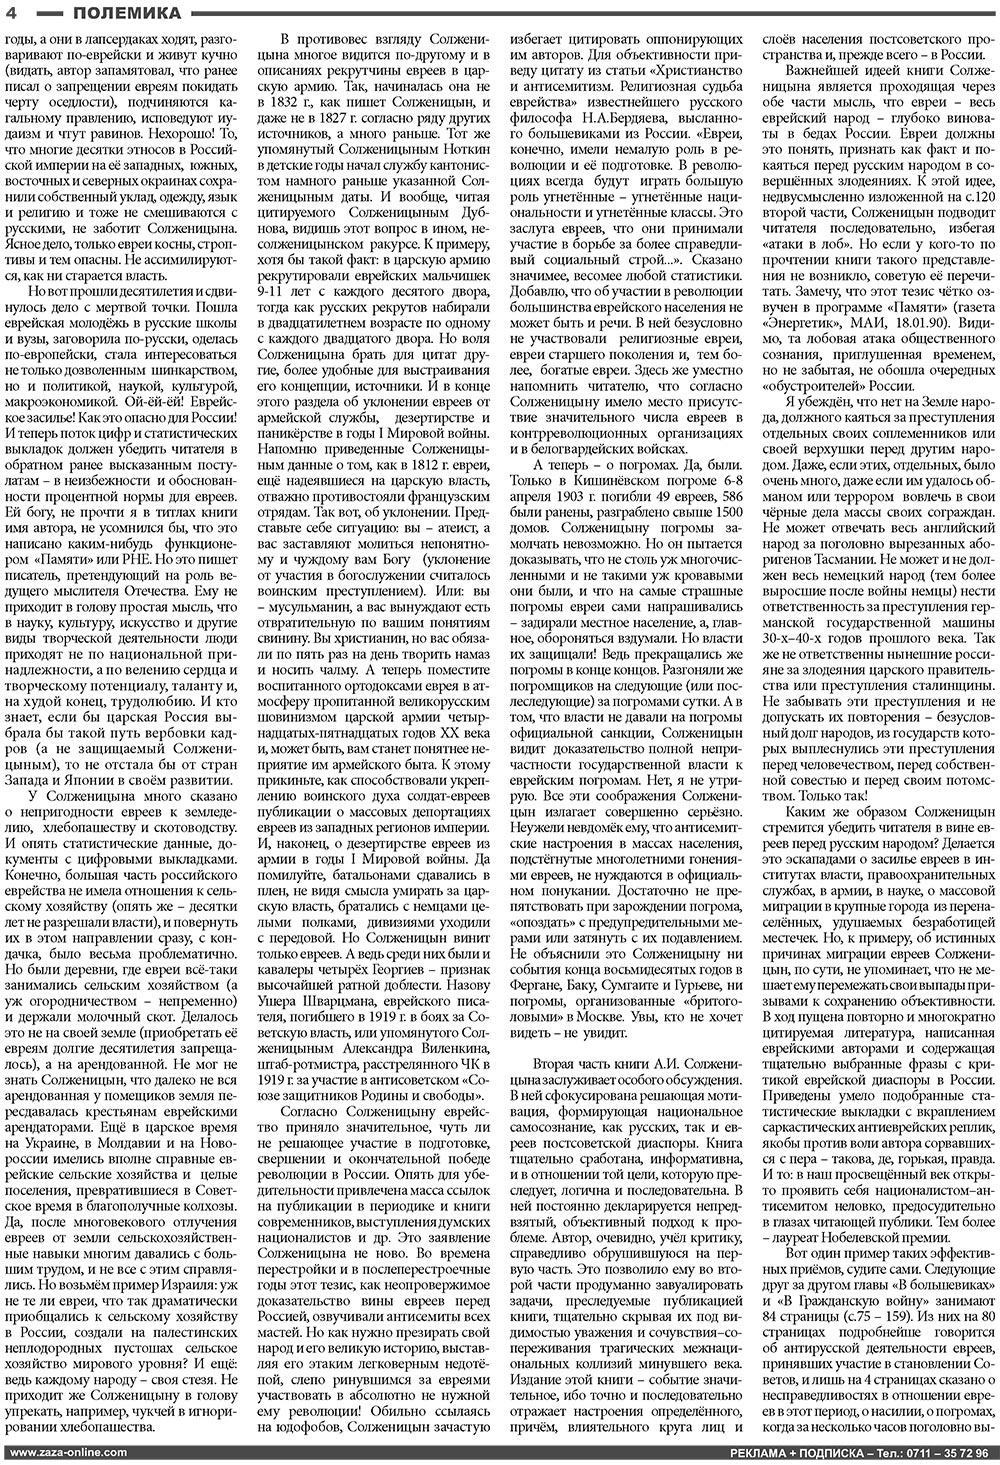 Известия BW (газета). 2008 год, номер 10, стр. 4